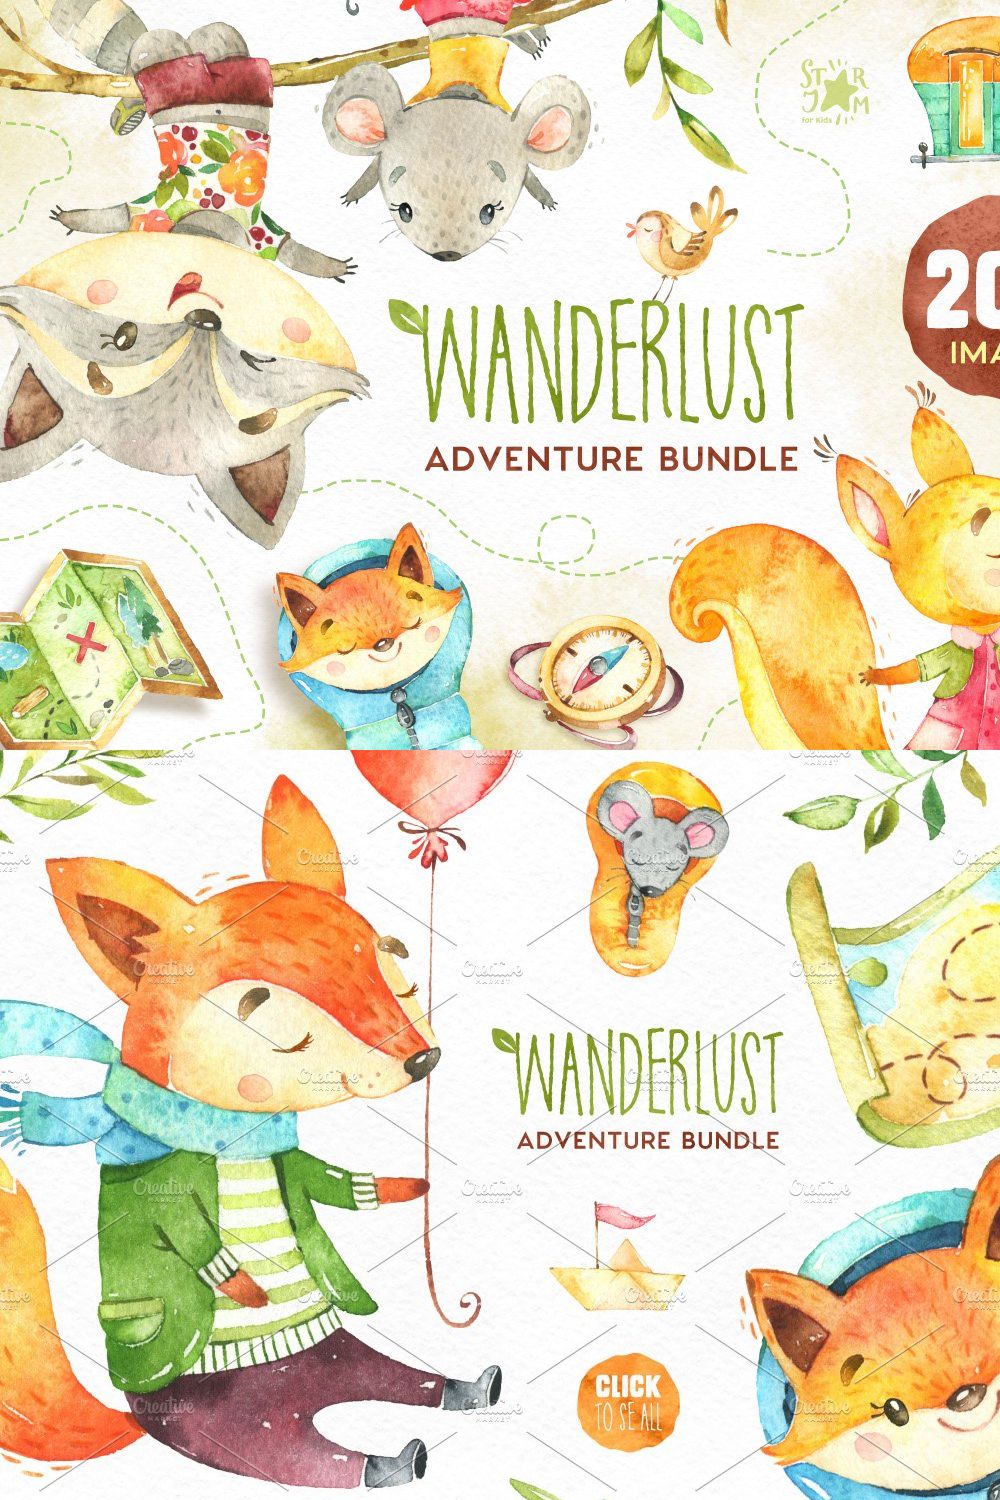 Wanderlust. Adventure bundle! pinterest preview image.